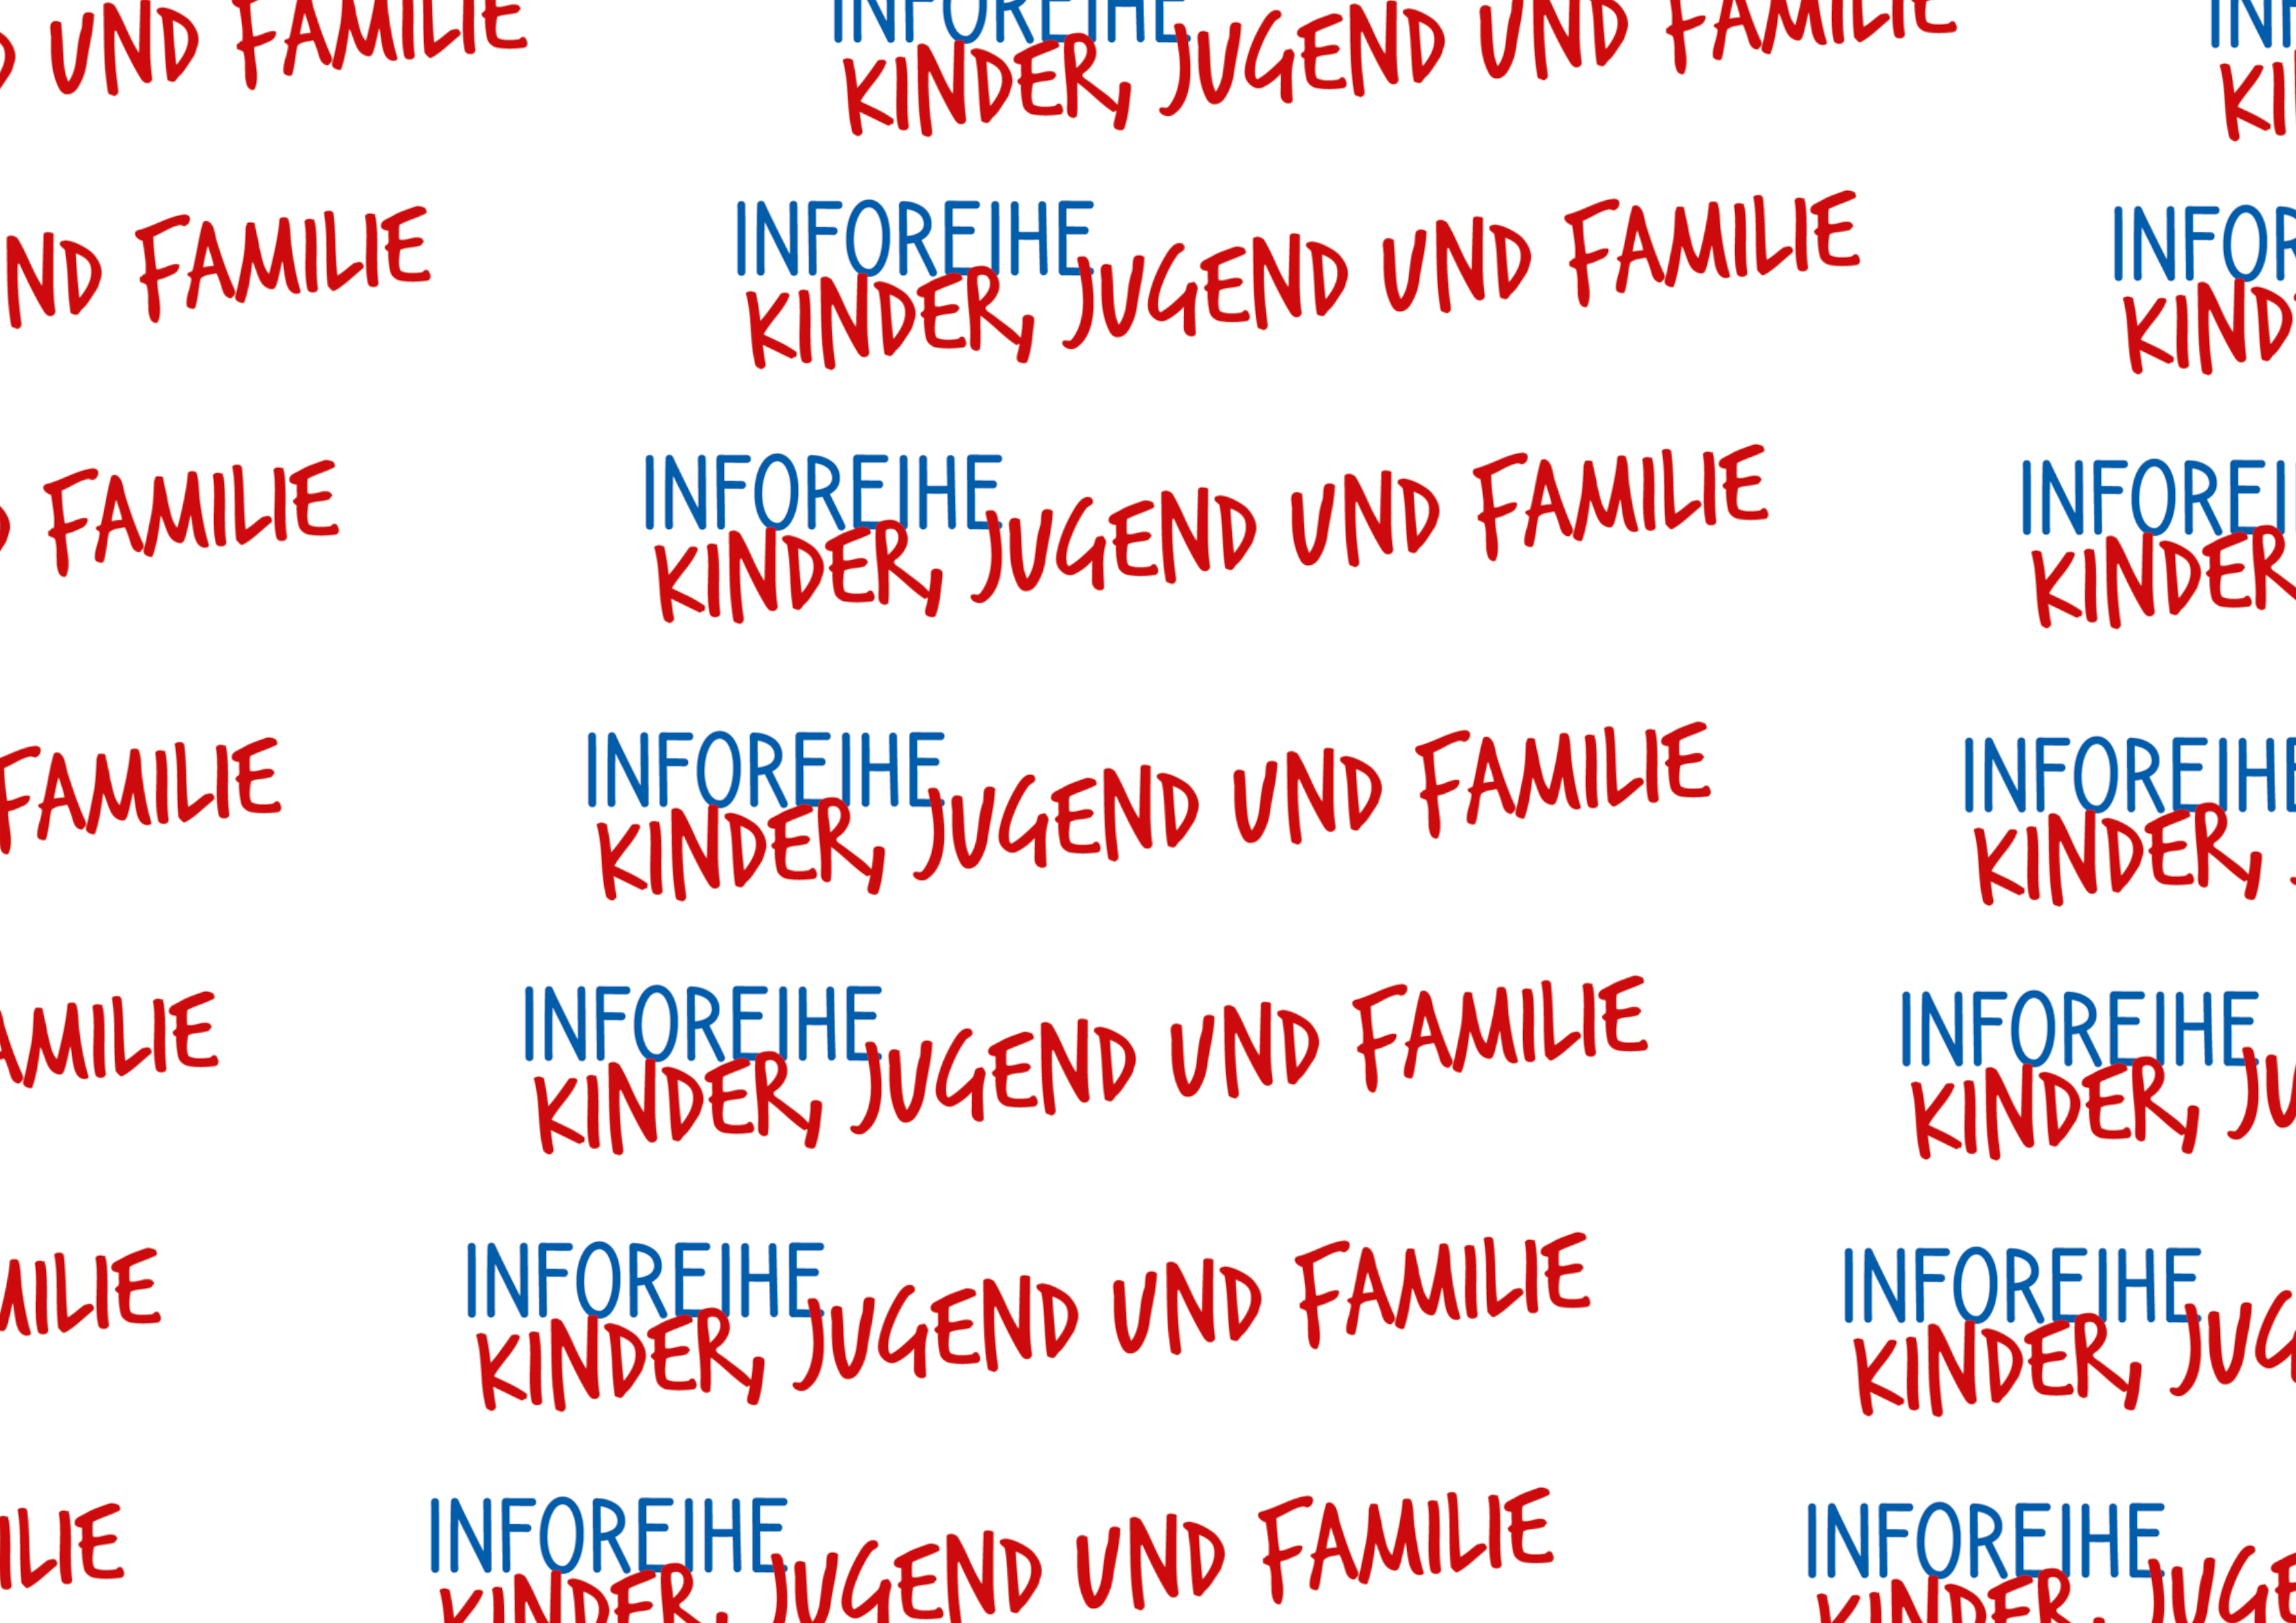 Logo: Inforeihe Kinder, Jugend und Familie